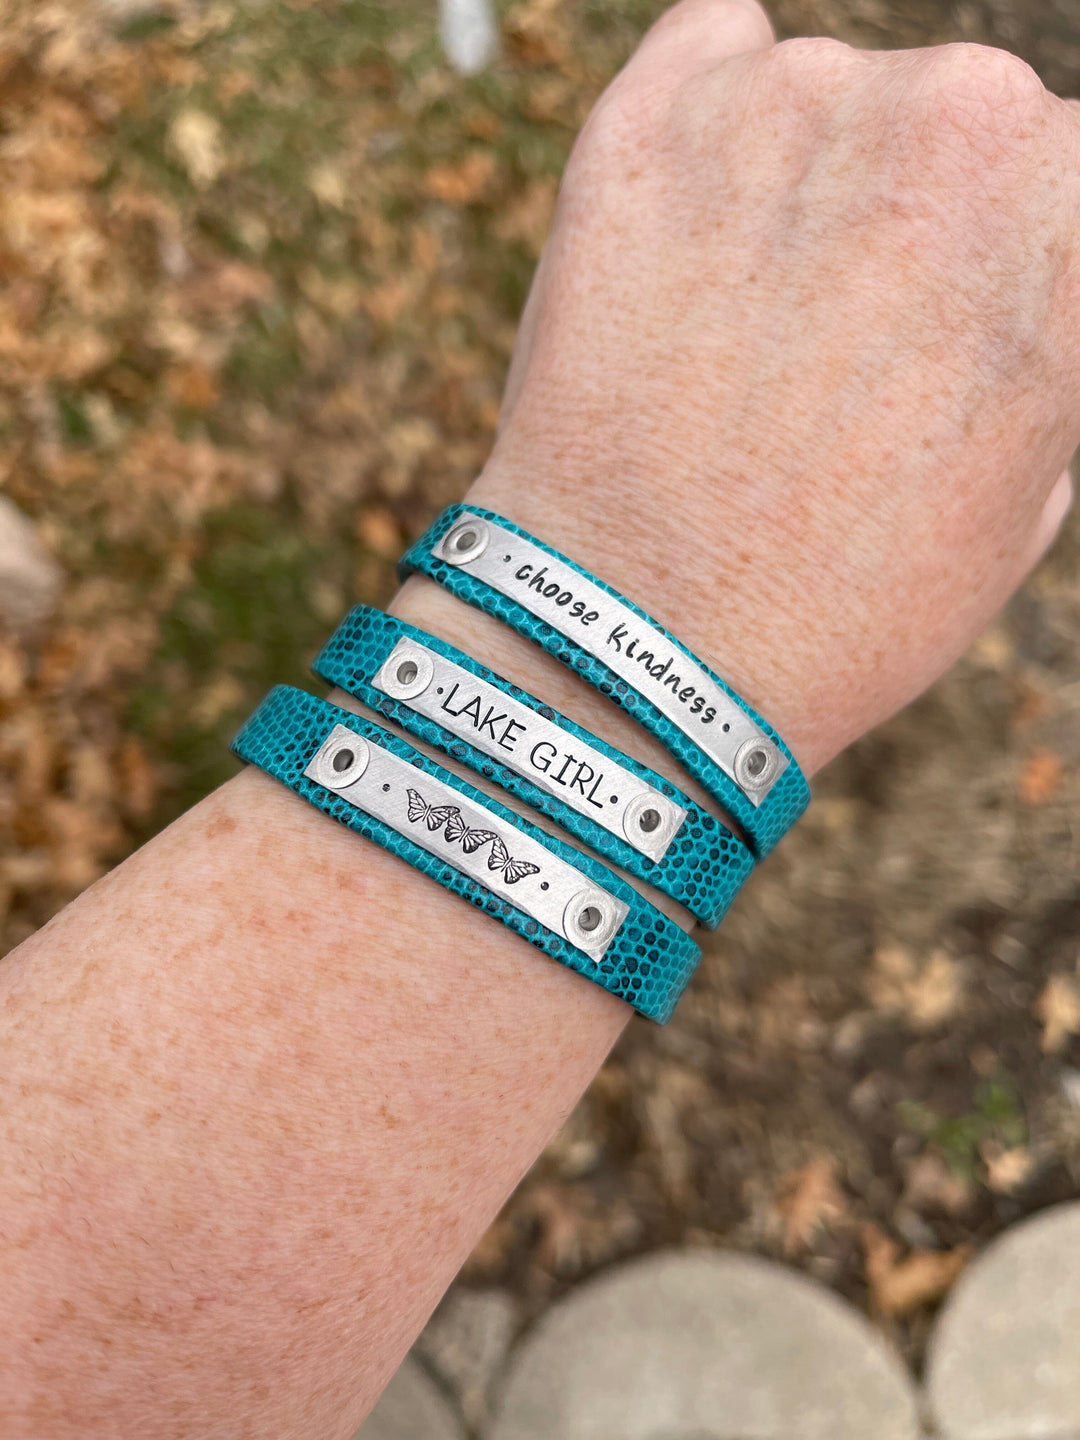 Turquoise Lizard Print LAKE GIRL | Leather Skinny Bracelet | Adjustable Skinny Bracelets Create Hope Cuffs 